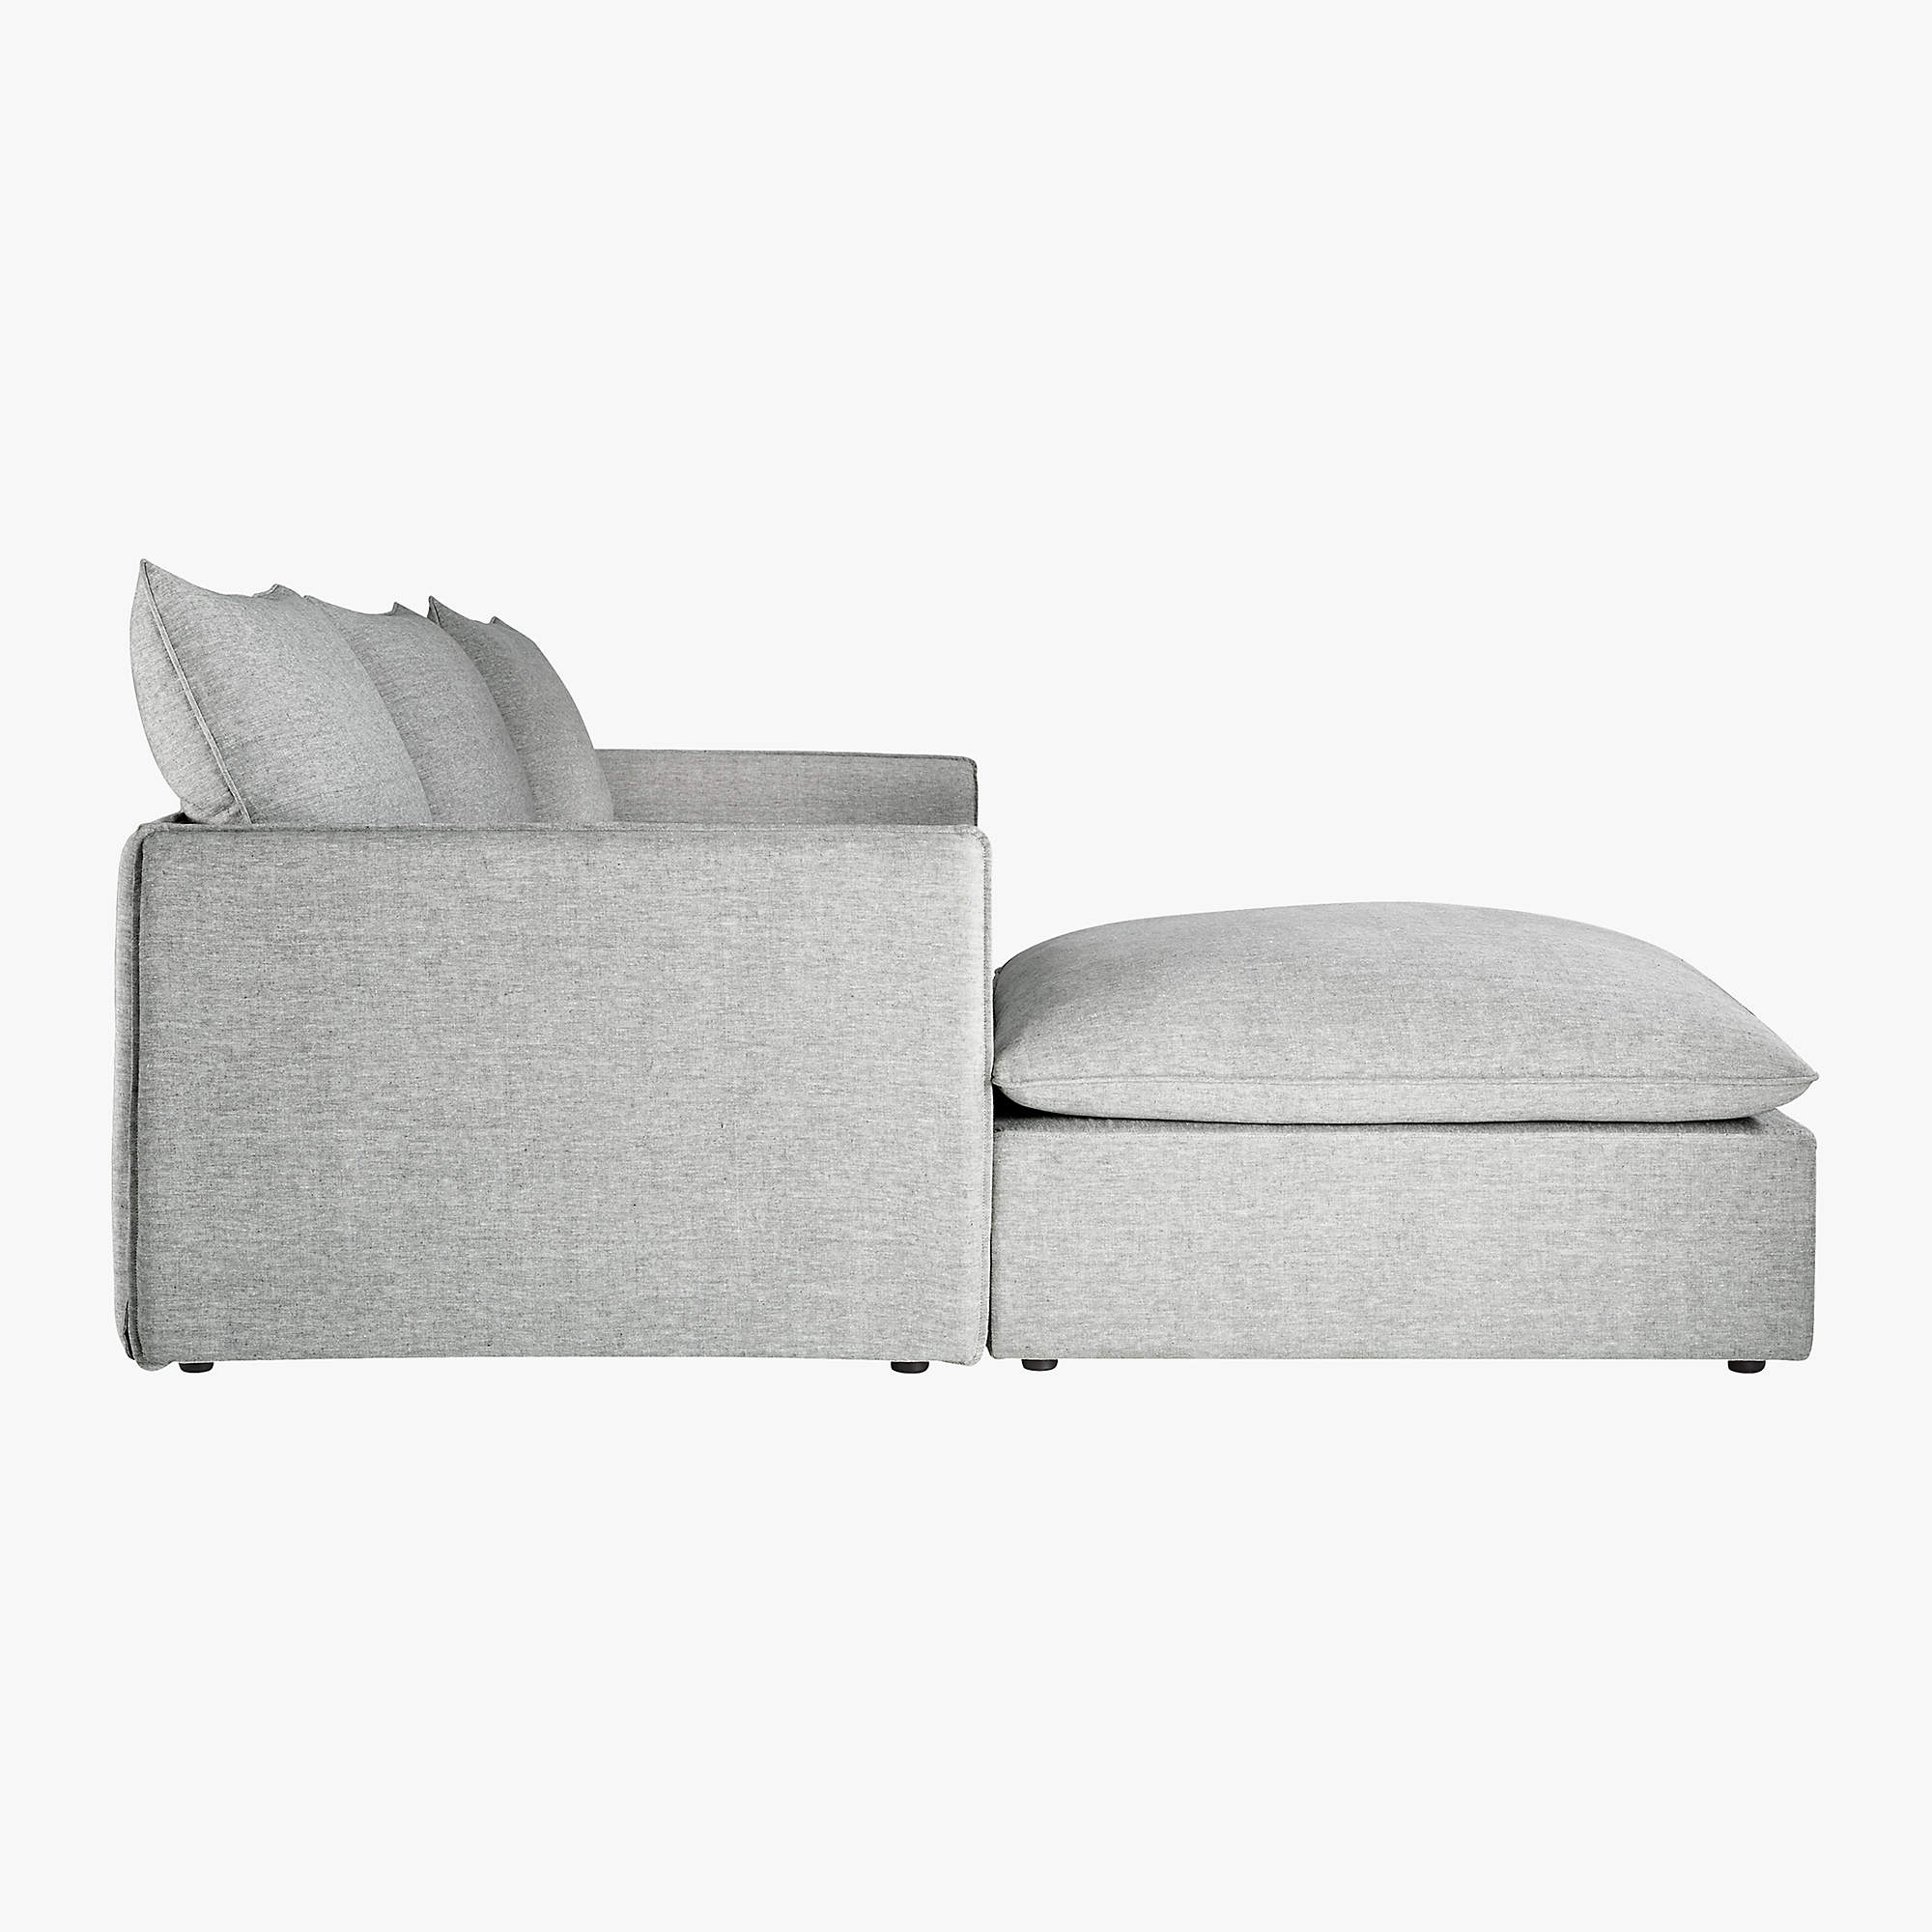 Lumin 4-Piece Sectional Sofa, Bloce Gray - Image 3